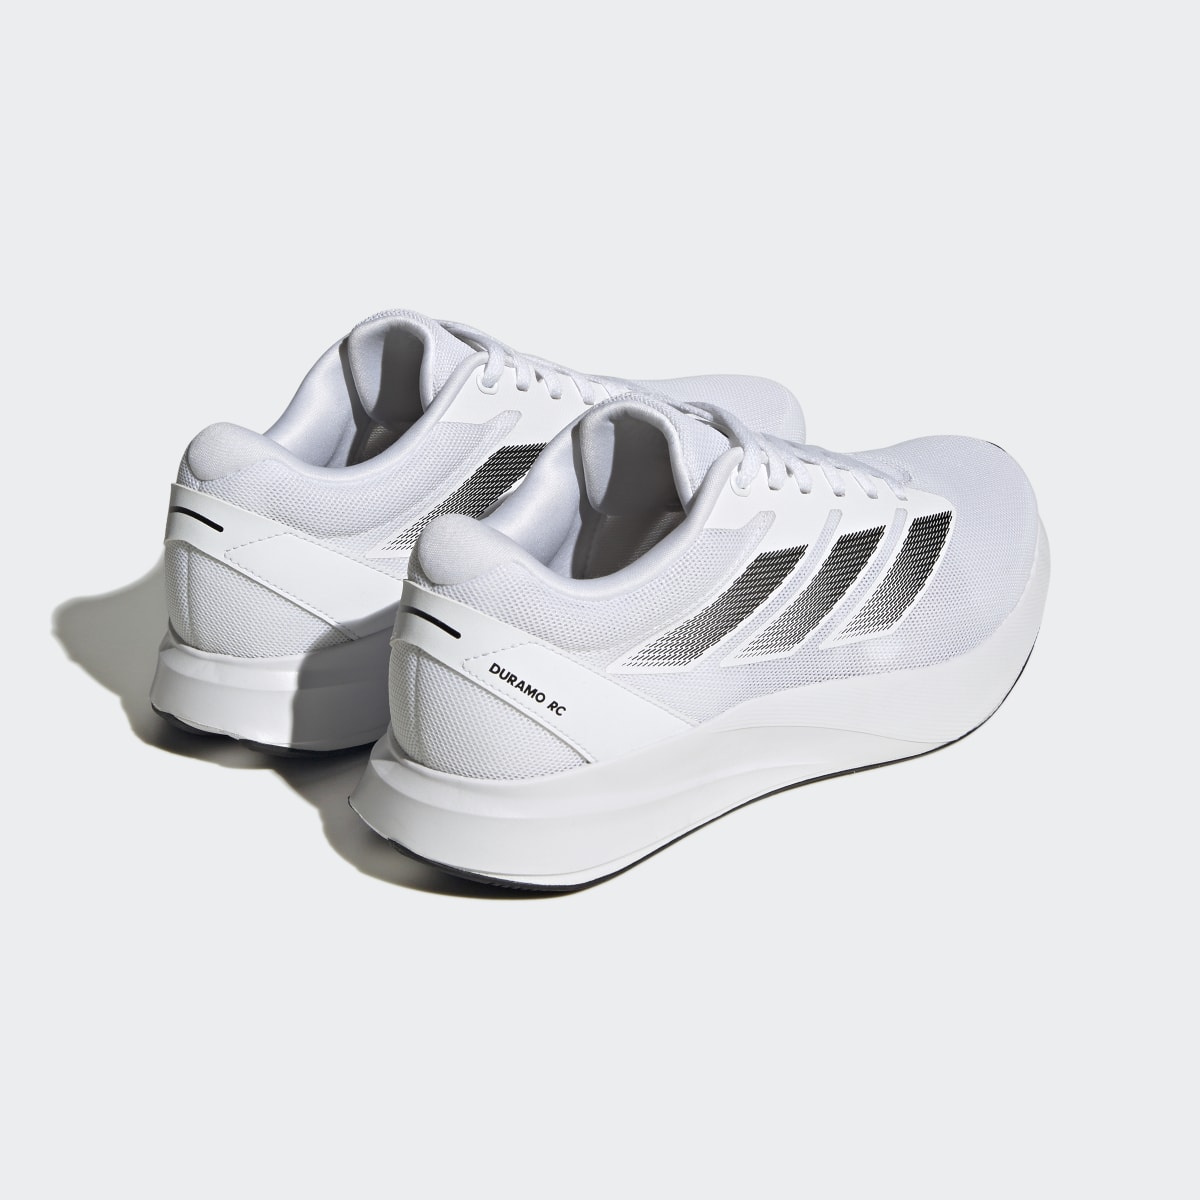 Adidas Duramo RC Shoes. 6